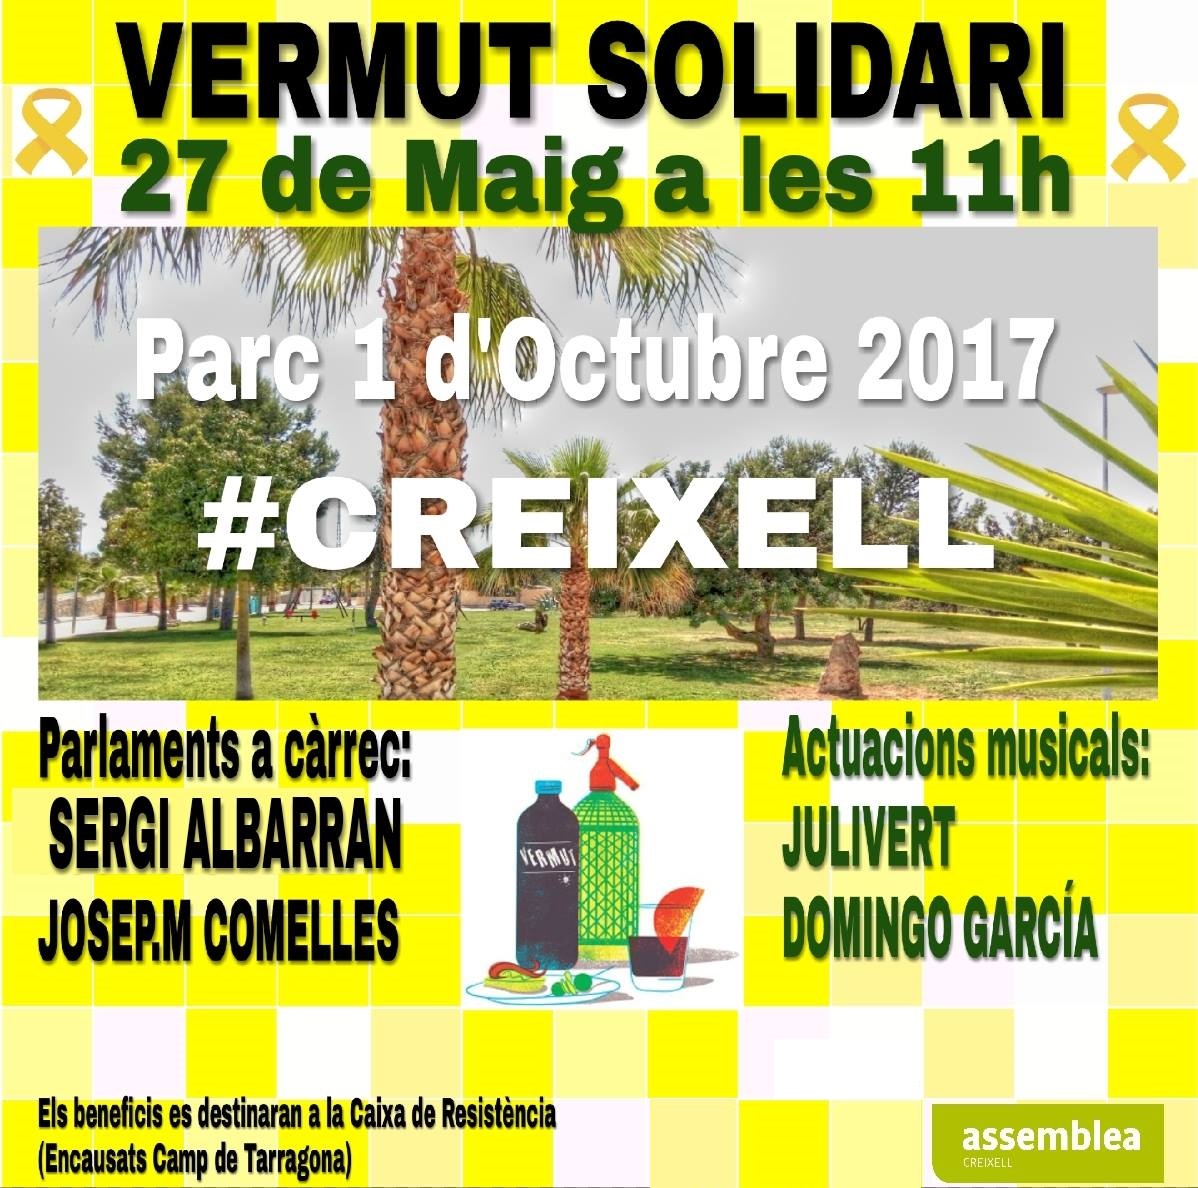 Creixell - Vermut solidari